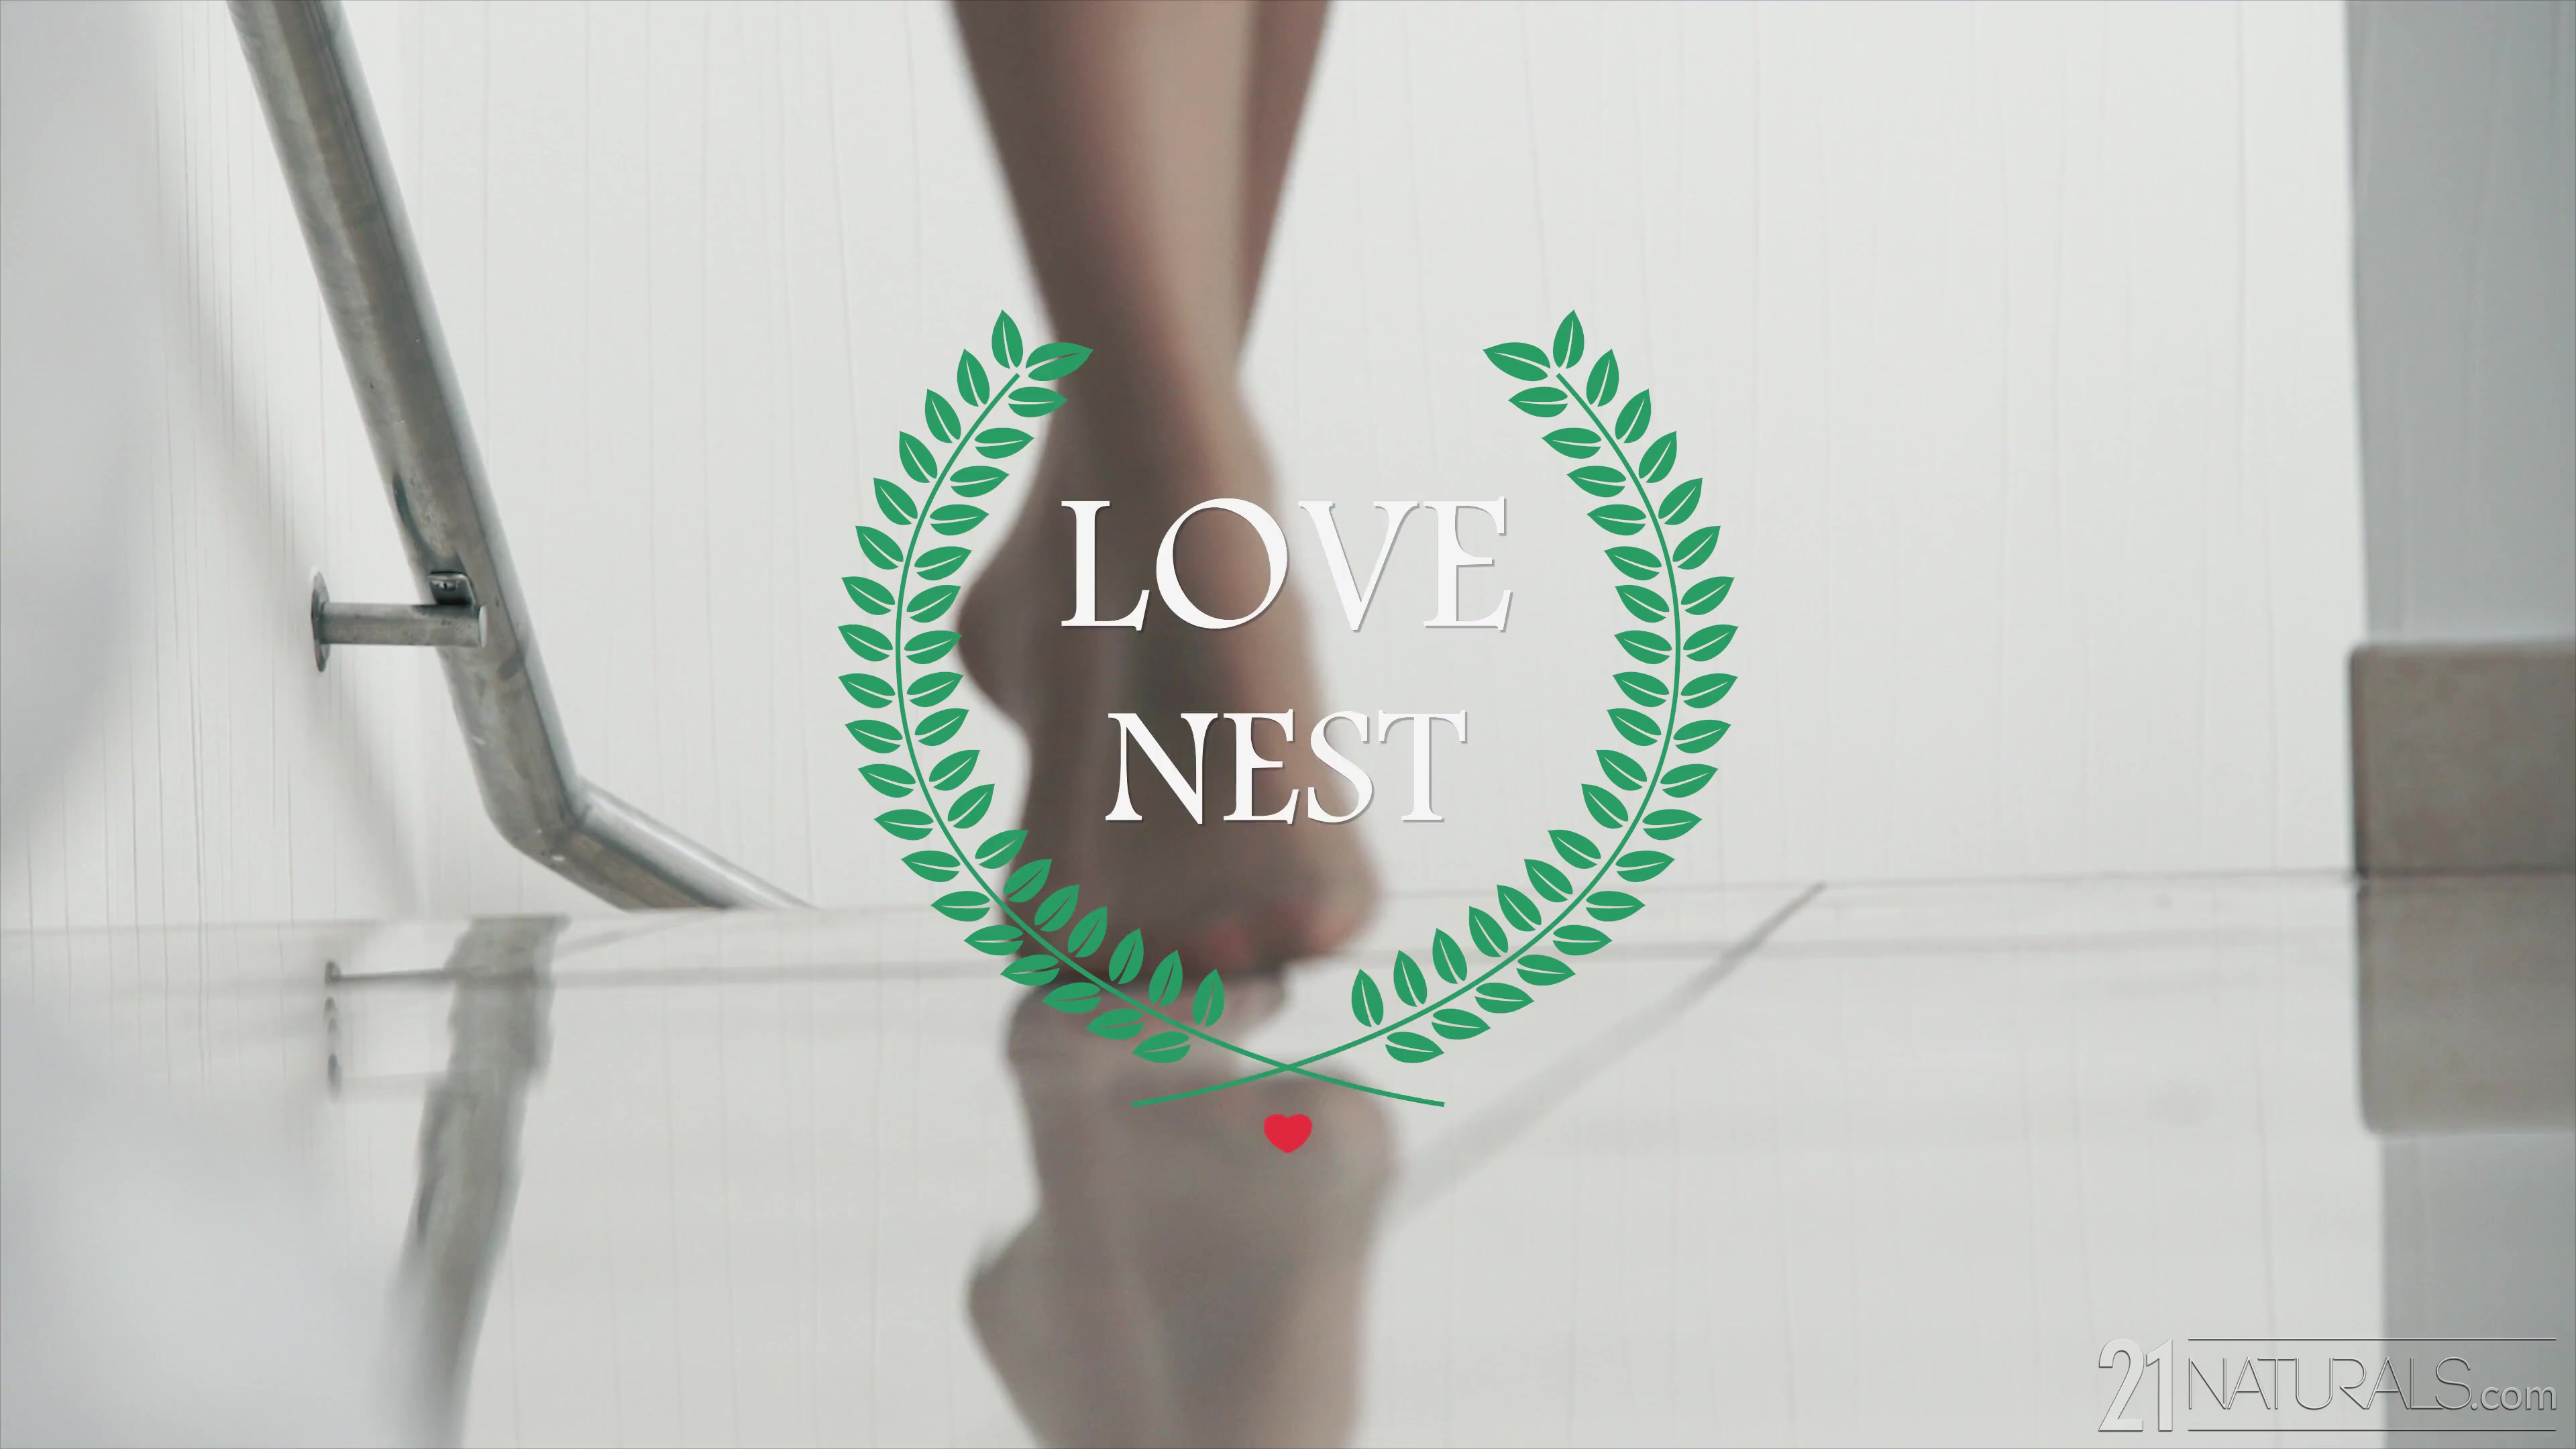 21EroticAnal - Kelly Slot - Love Nest